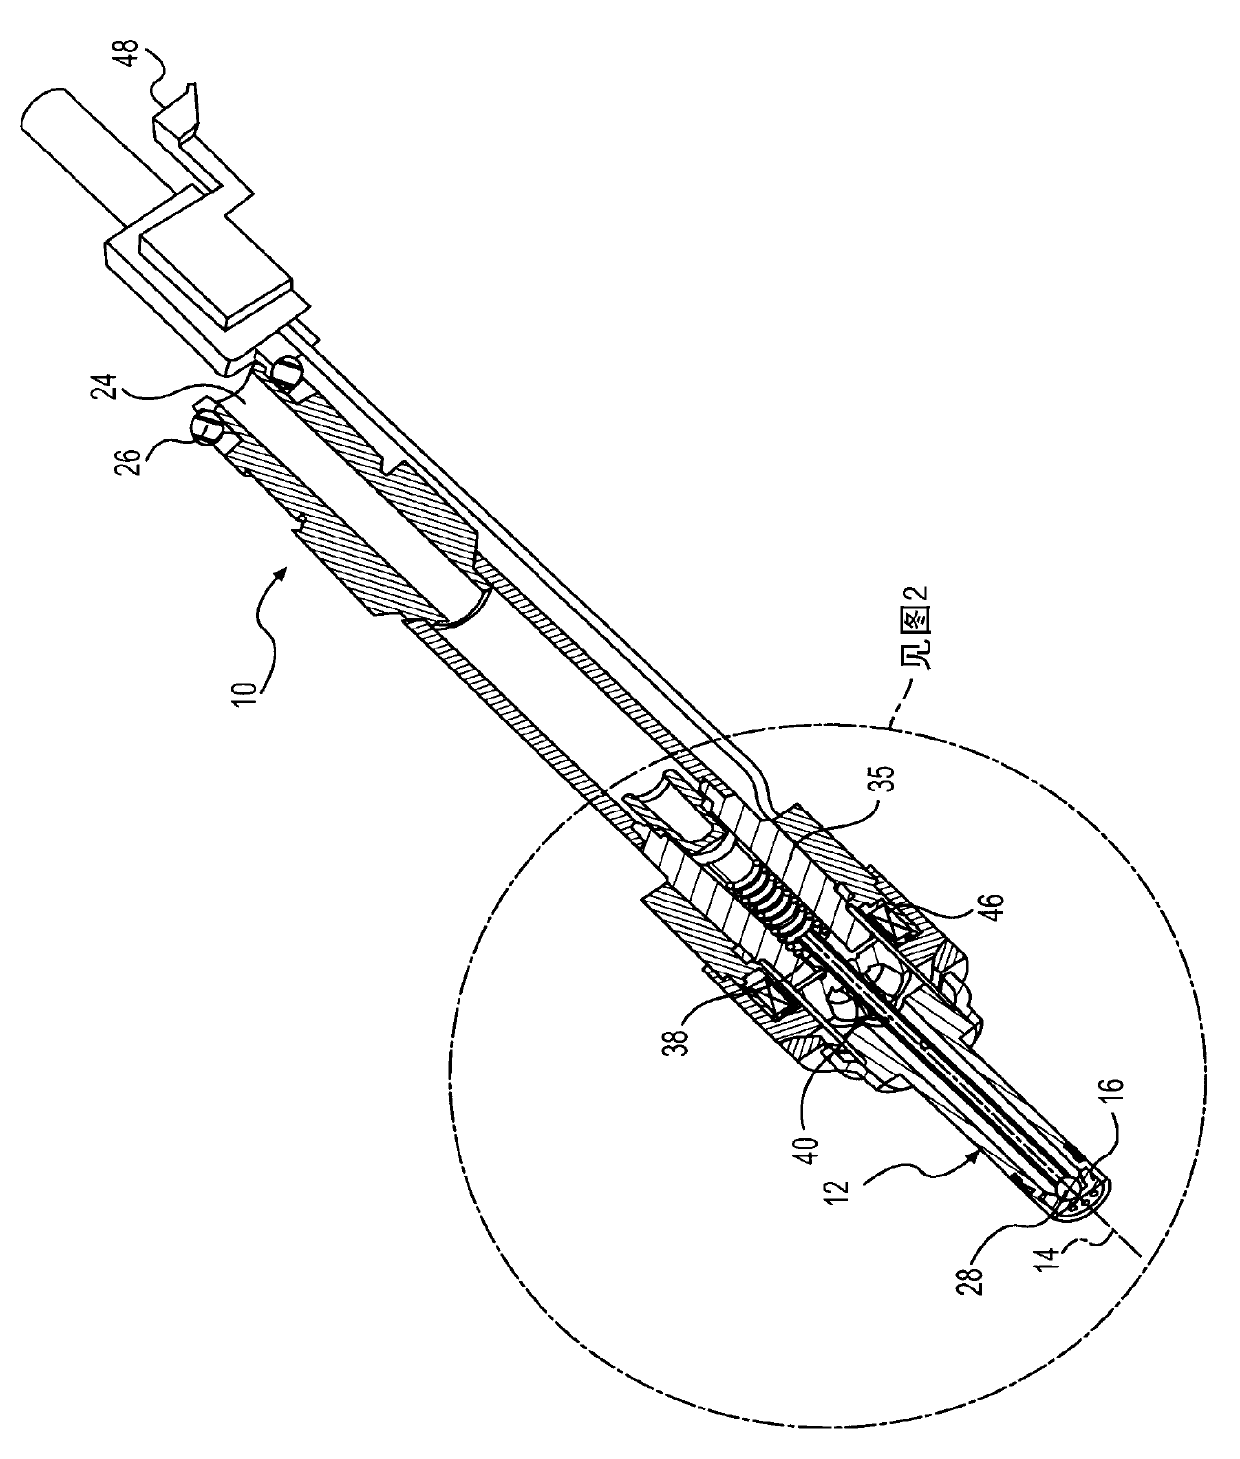 Automotive gasoline solenoid double pole direct injector